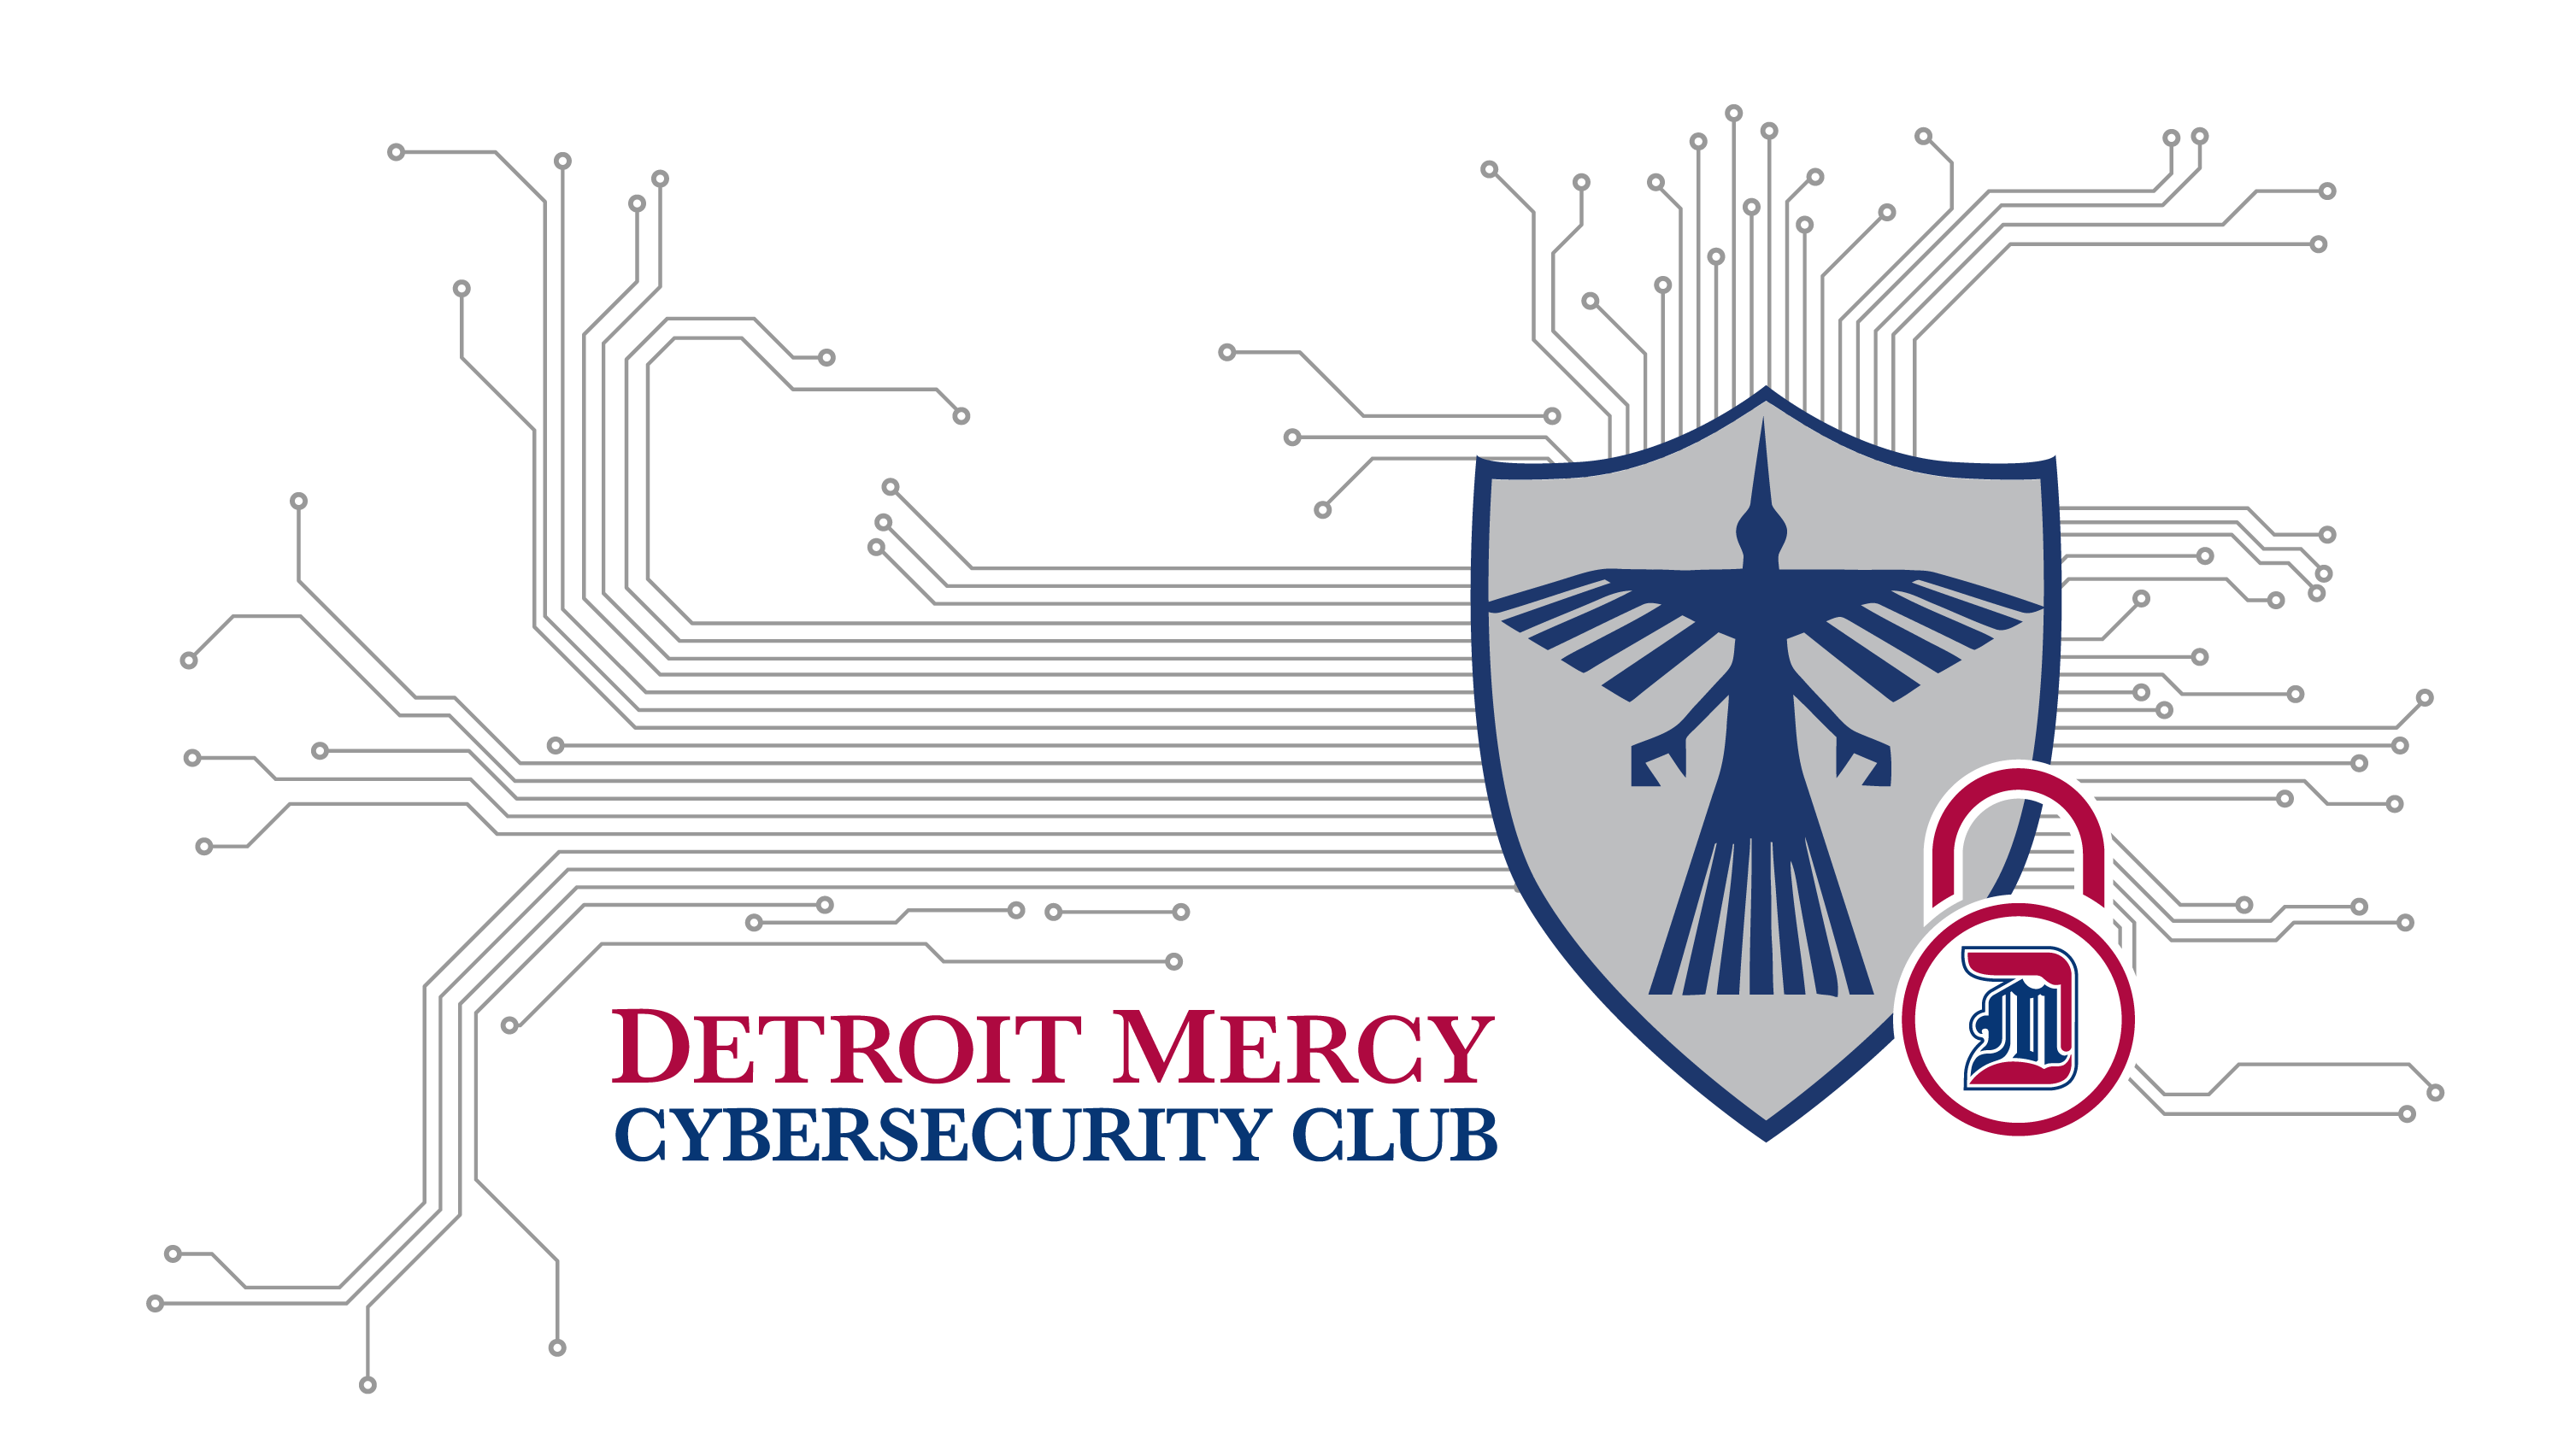 Cybersecurity club logo